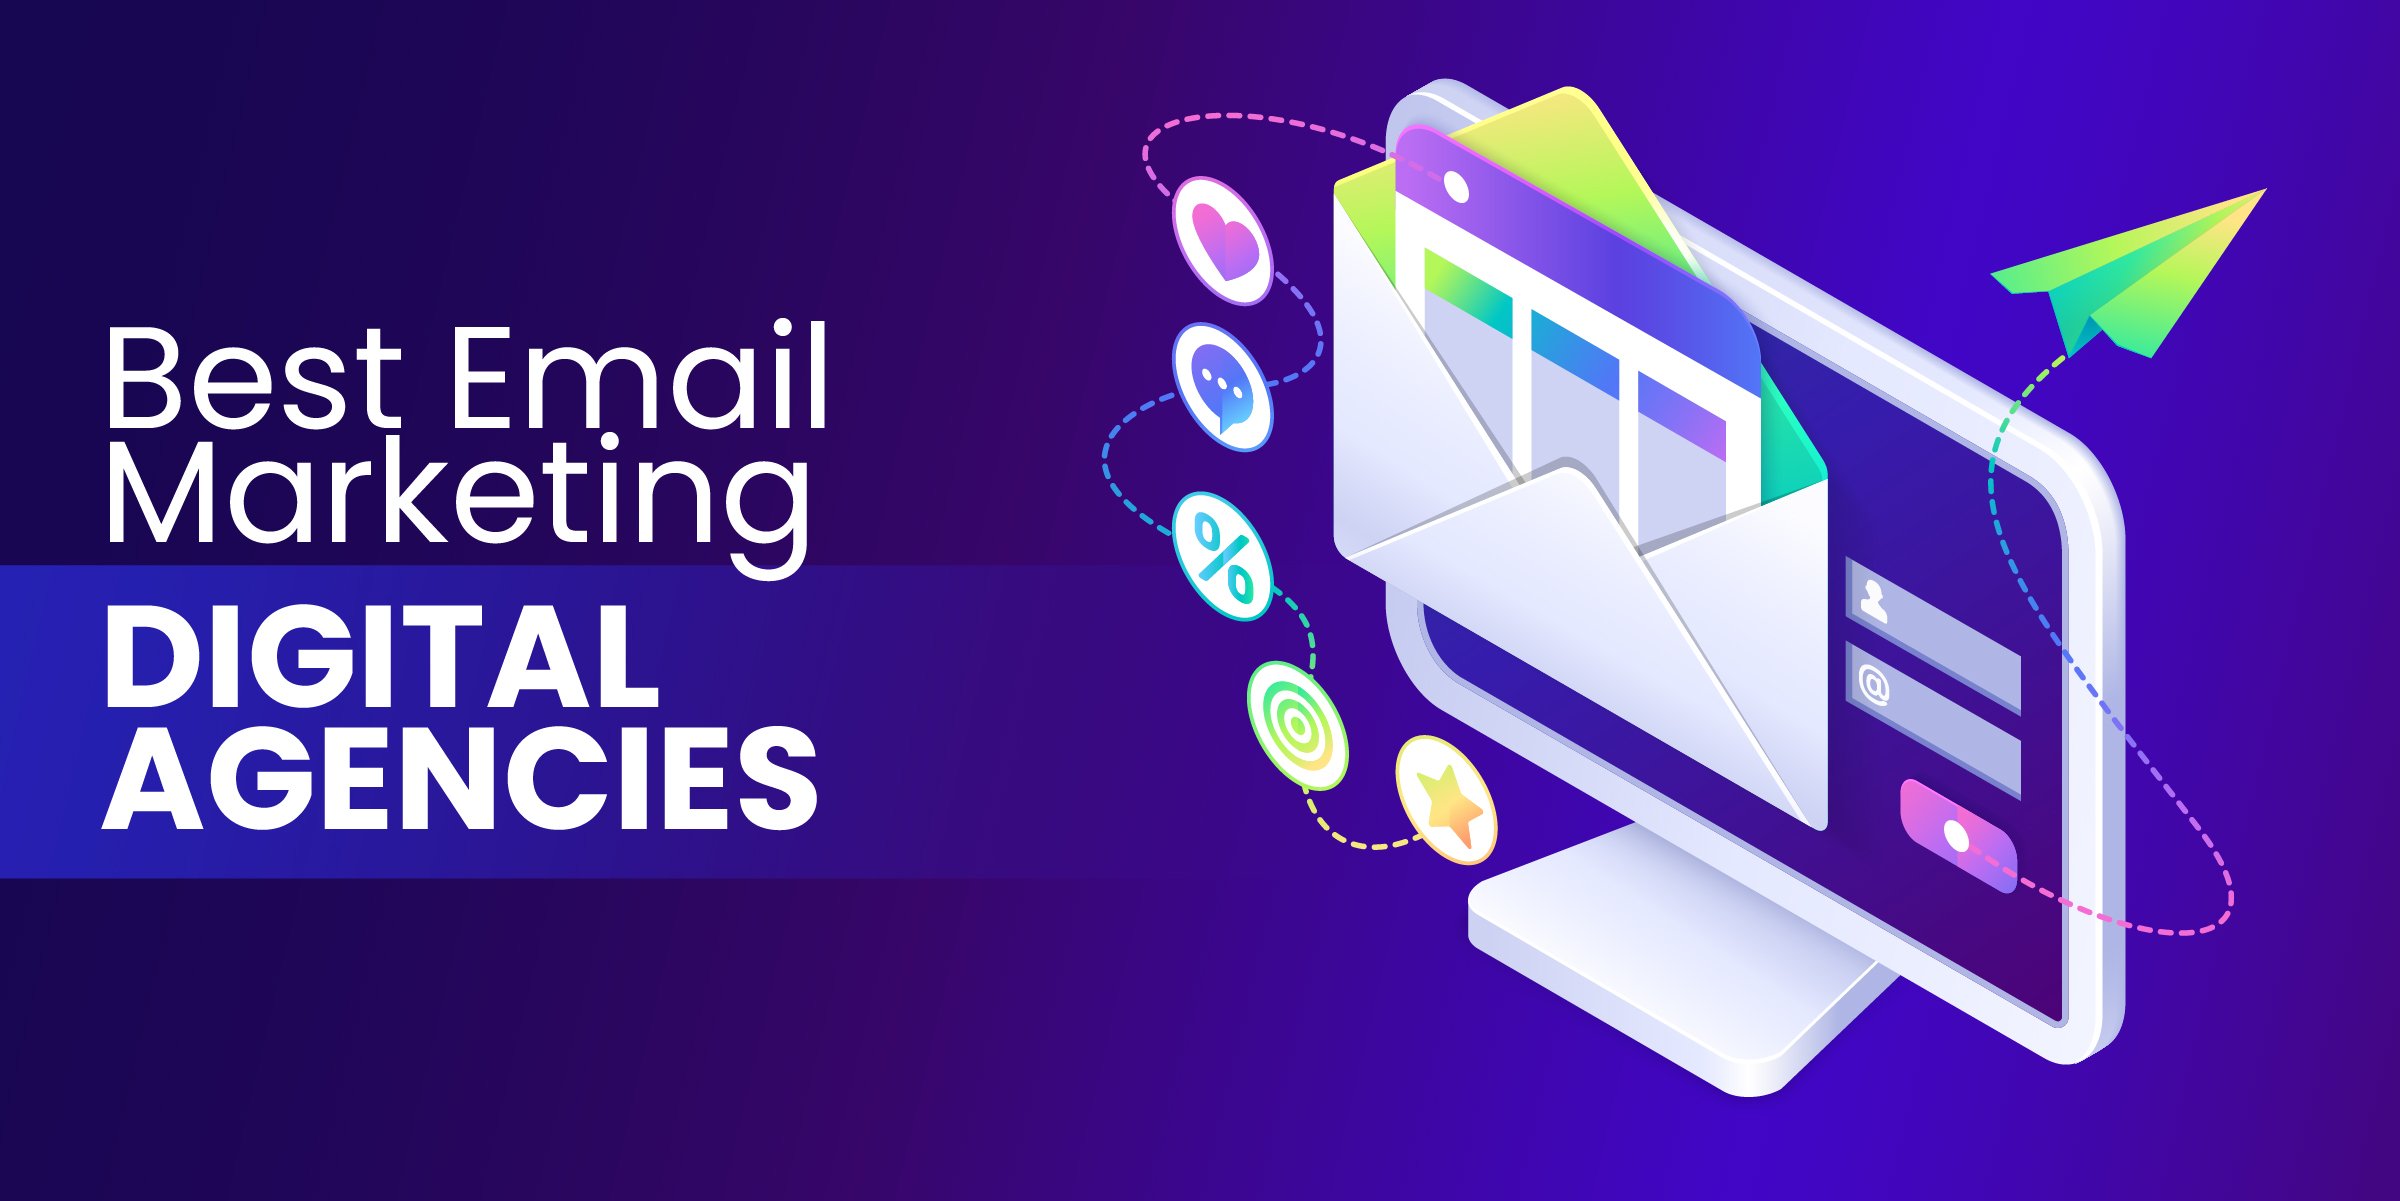 Best Email Marketing Digital Agencies